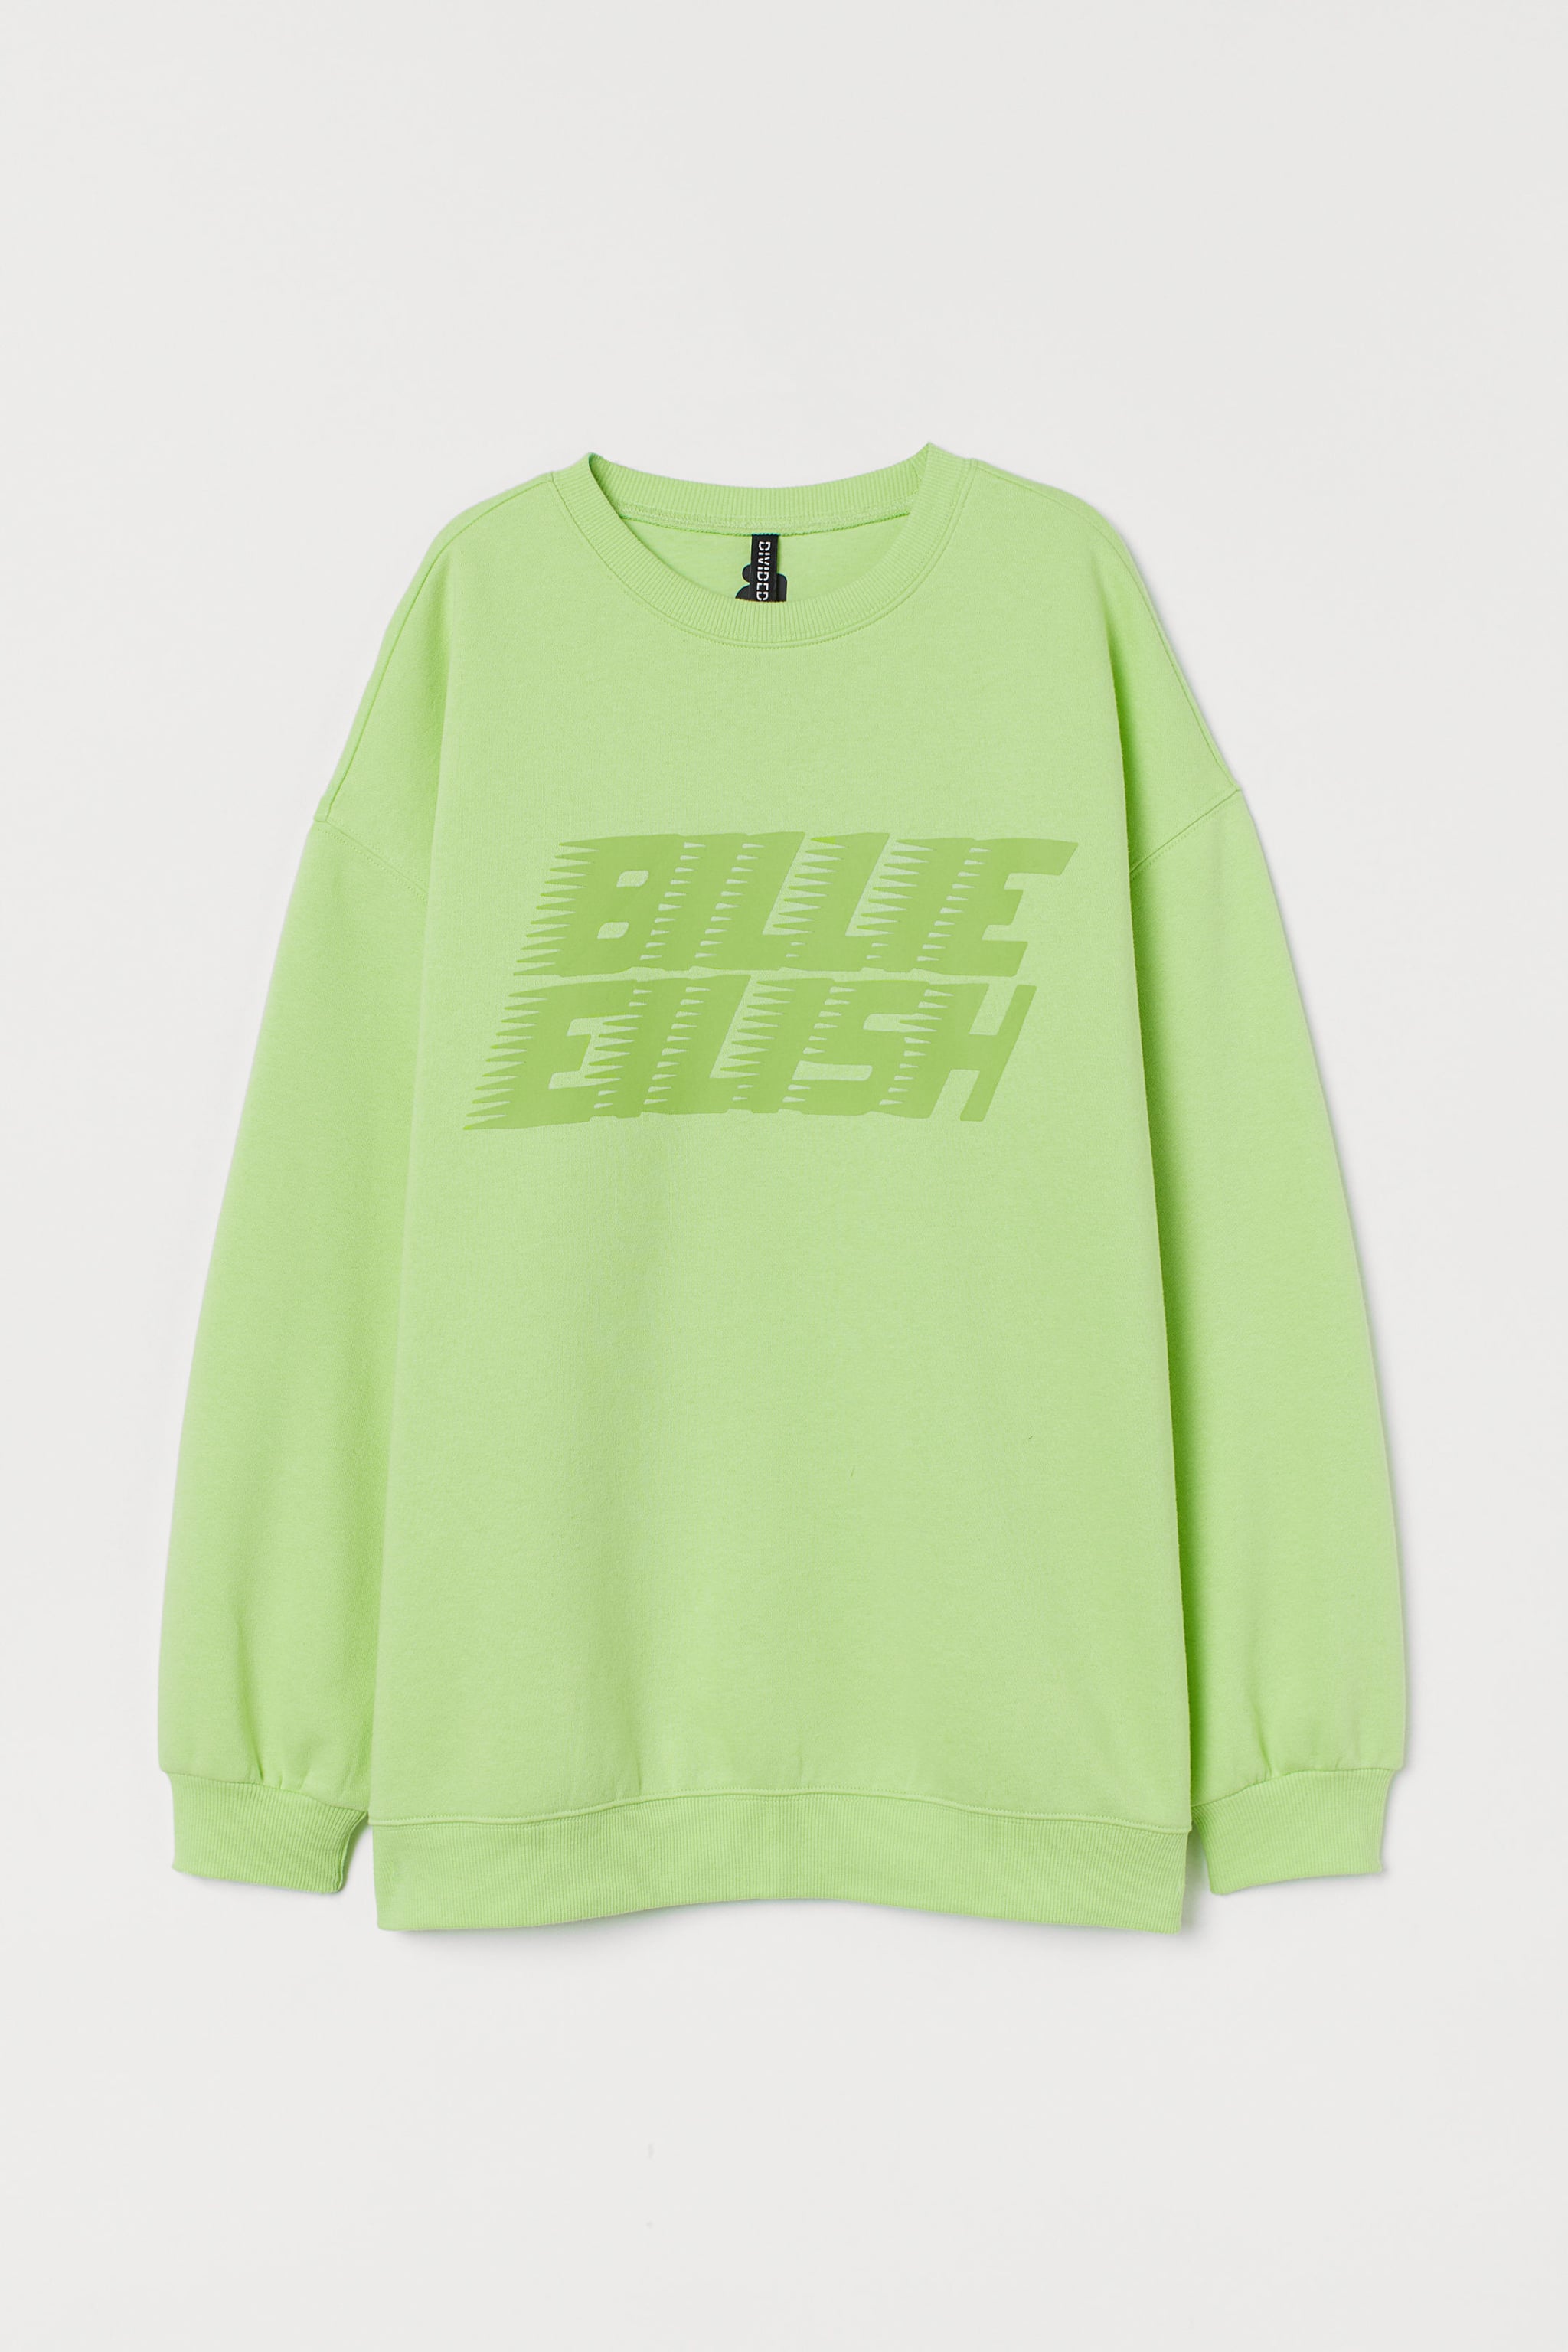 Billie Eilish Sweatshirt With Graphic Print At H M H M Just